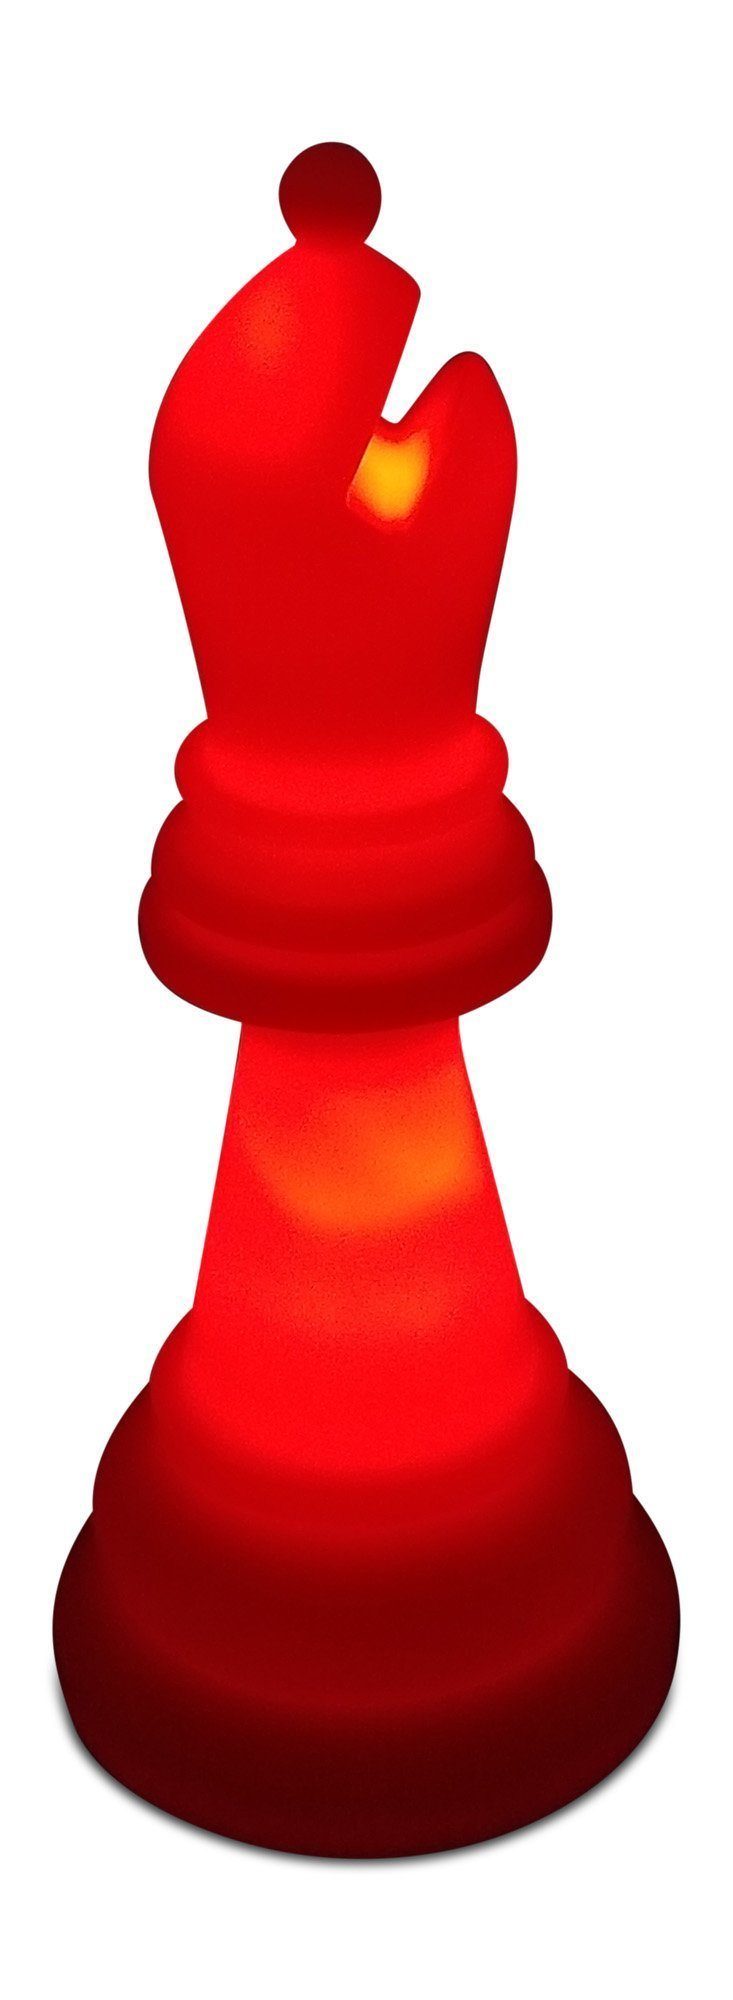 MegaChess 20 Inch Premium Plastic Bishop Light-Up Giant Chess Piece - Red |  | GiantChessUSA